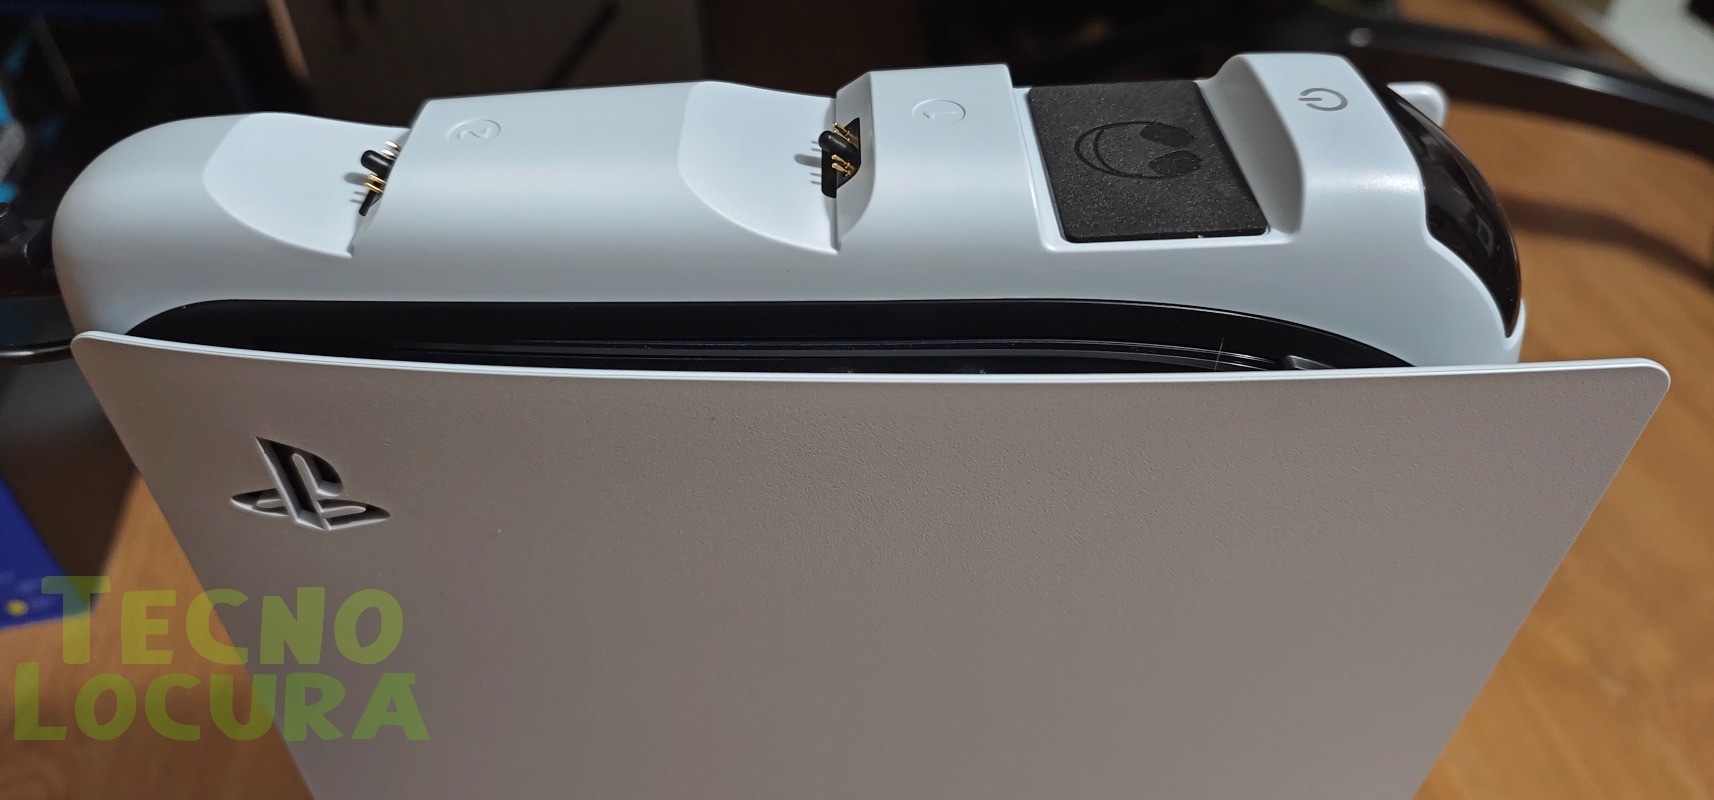 El mejor cargador de mandos DualSense - OIVO PS5 Controller Charging Station REVIEW TECNOLOCURA